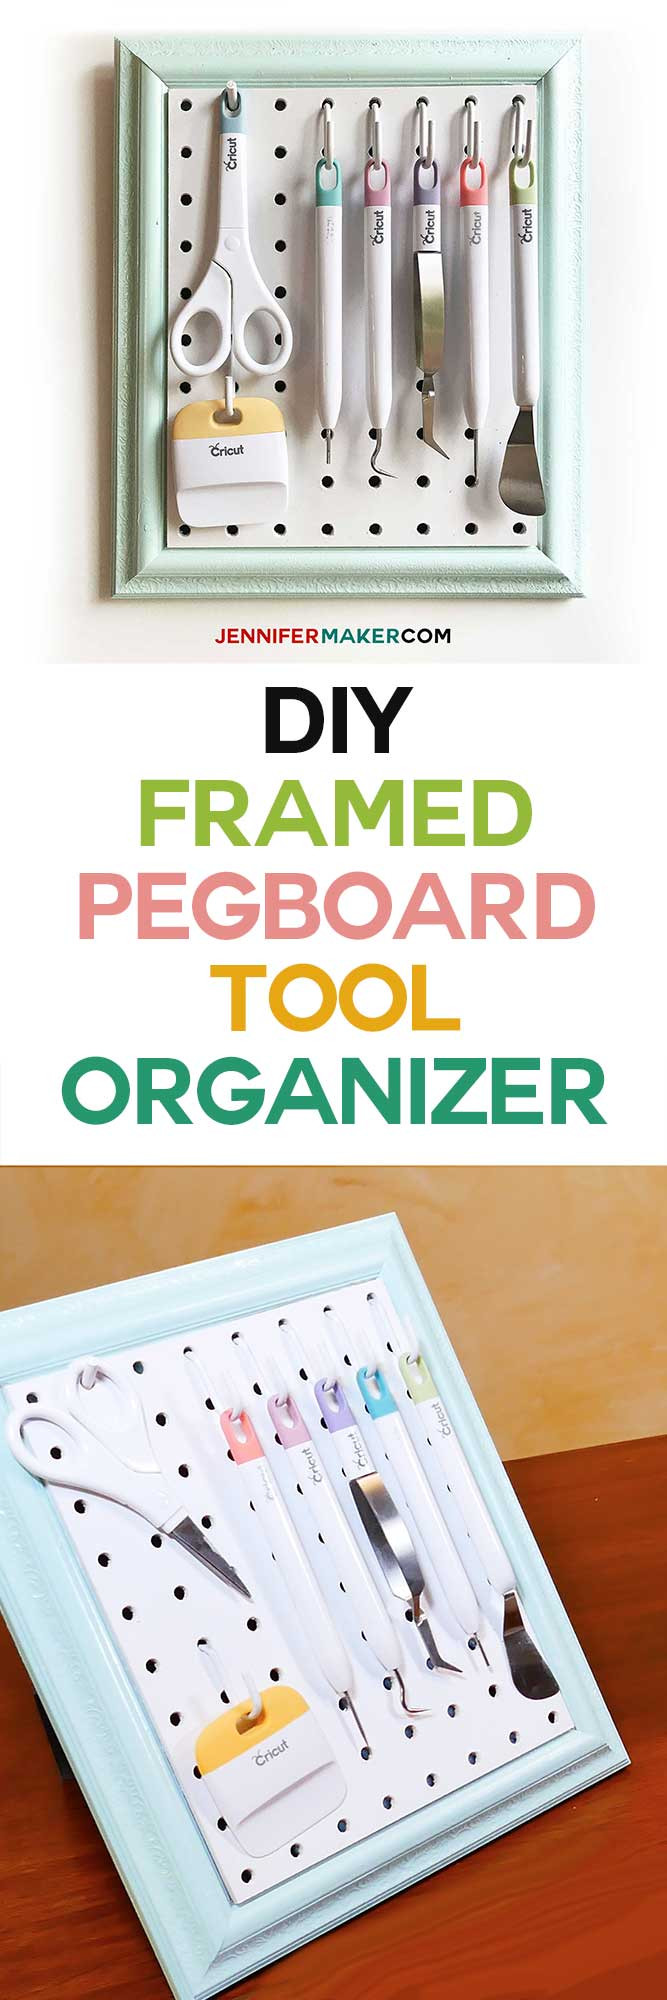 DIY Pegboard Tool Organizer
 DIY Framed Pegboard Craft Organizer for Tools Jennifer Maker